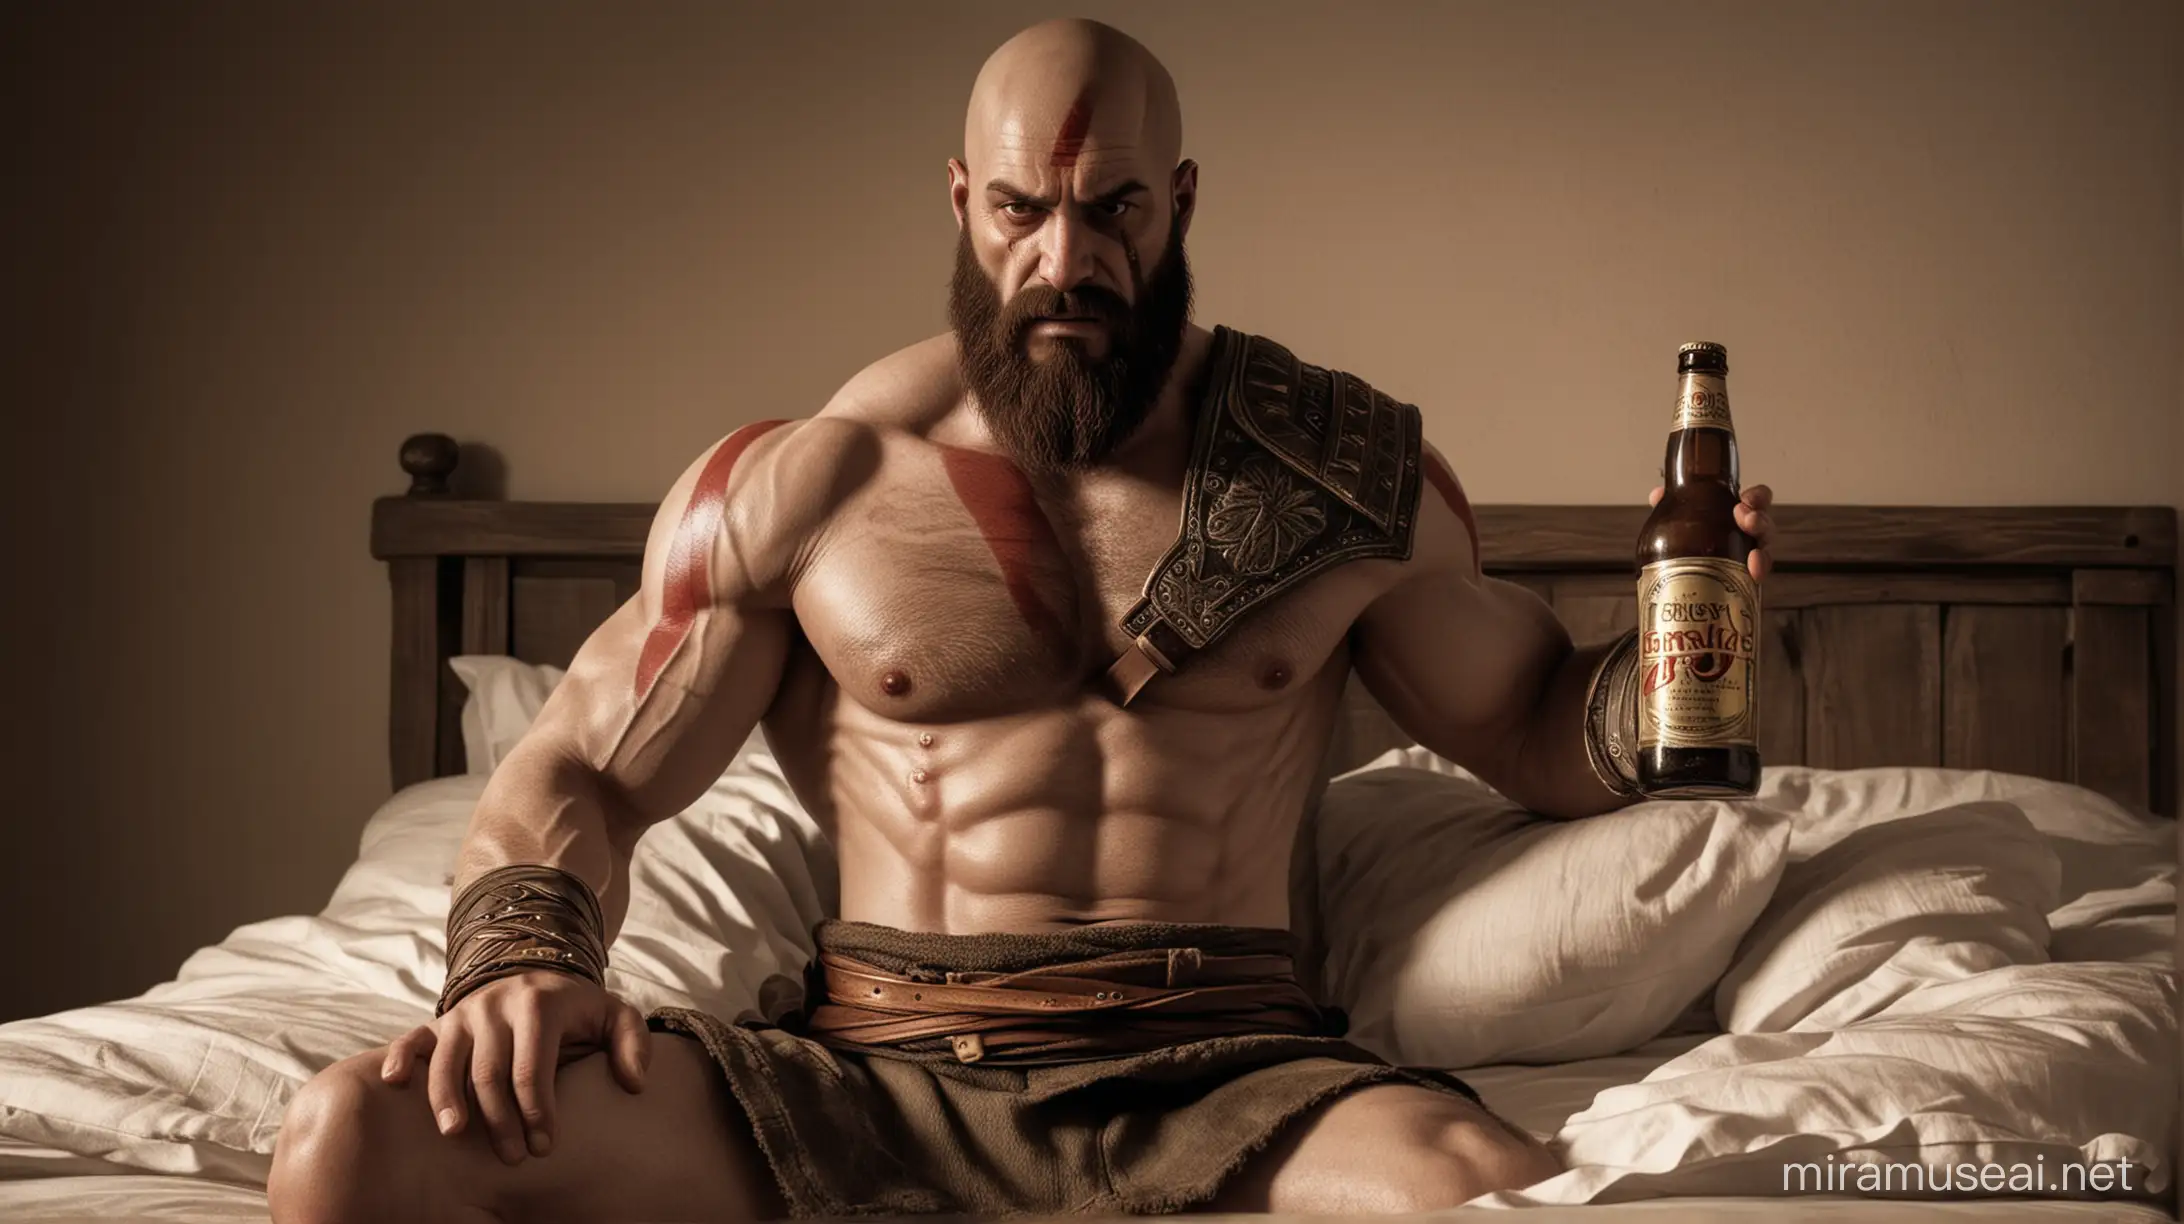 Depressed Kratos Holding Beer Bottle by His Bed